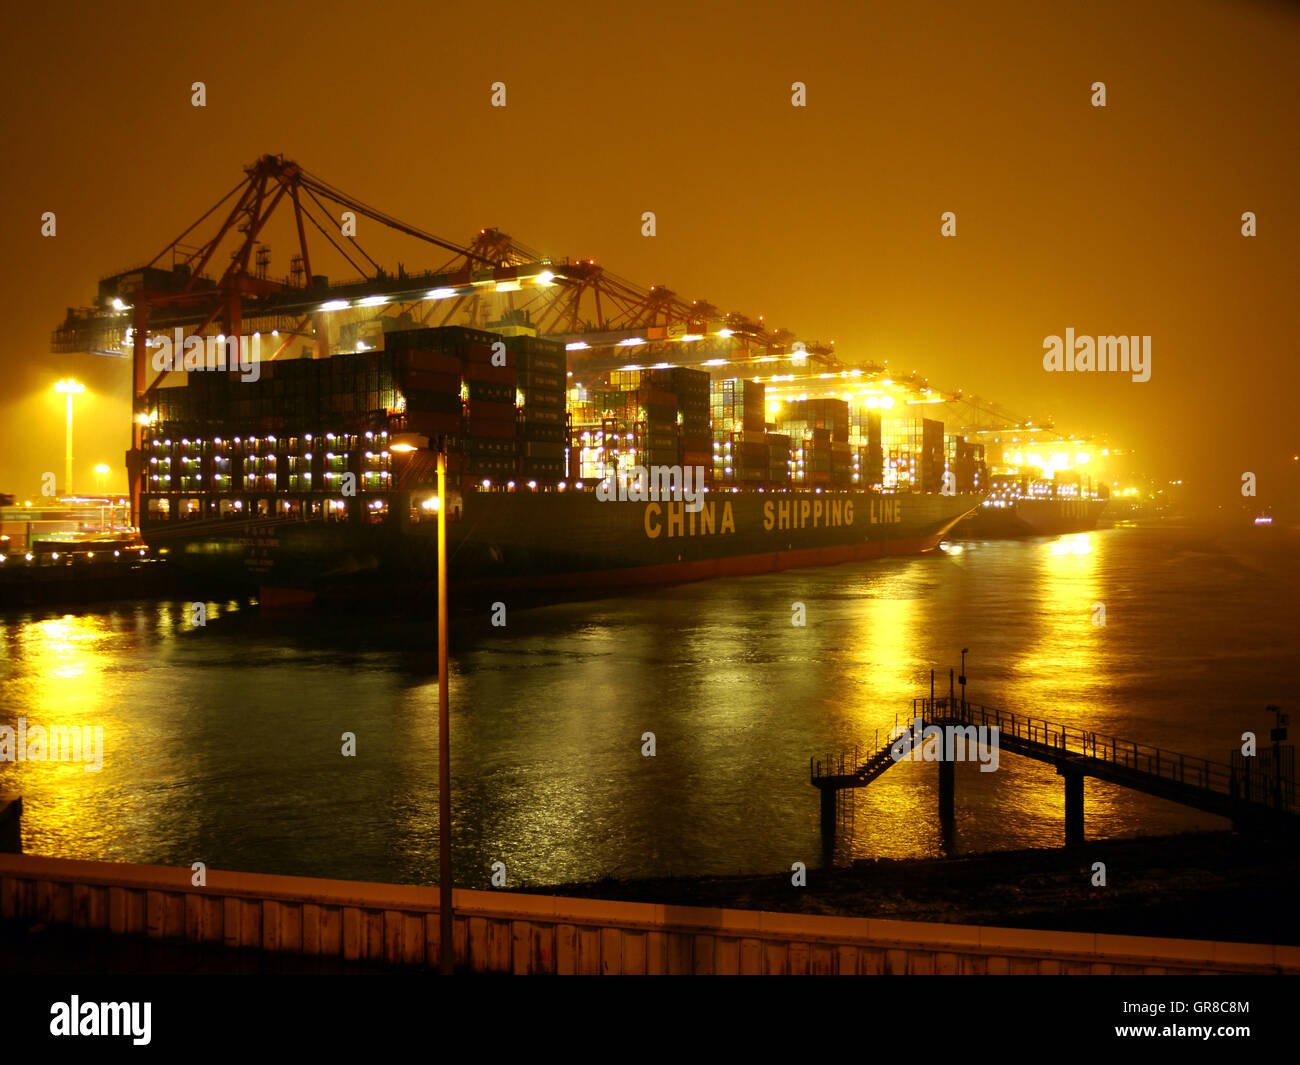 Cscl Globe In The Port Of Hamburg Stock Photo